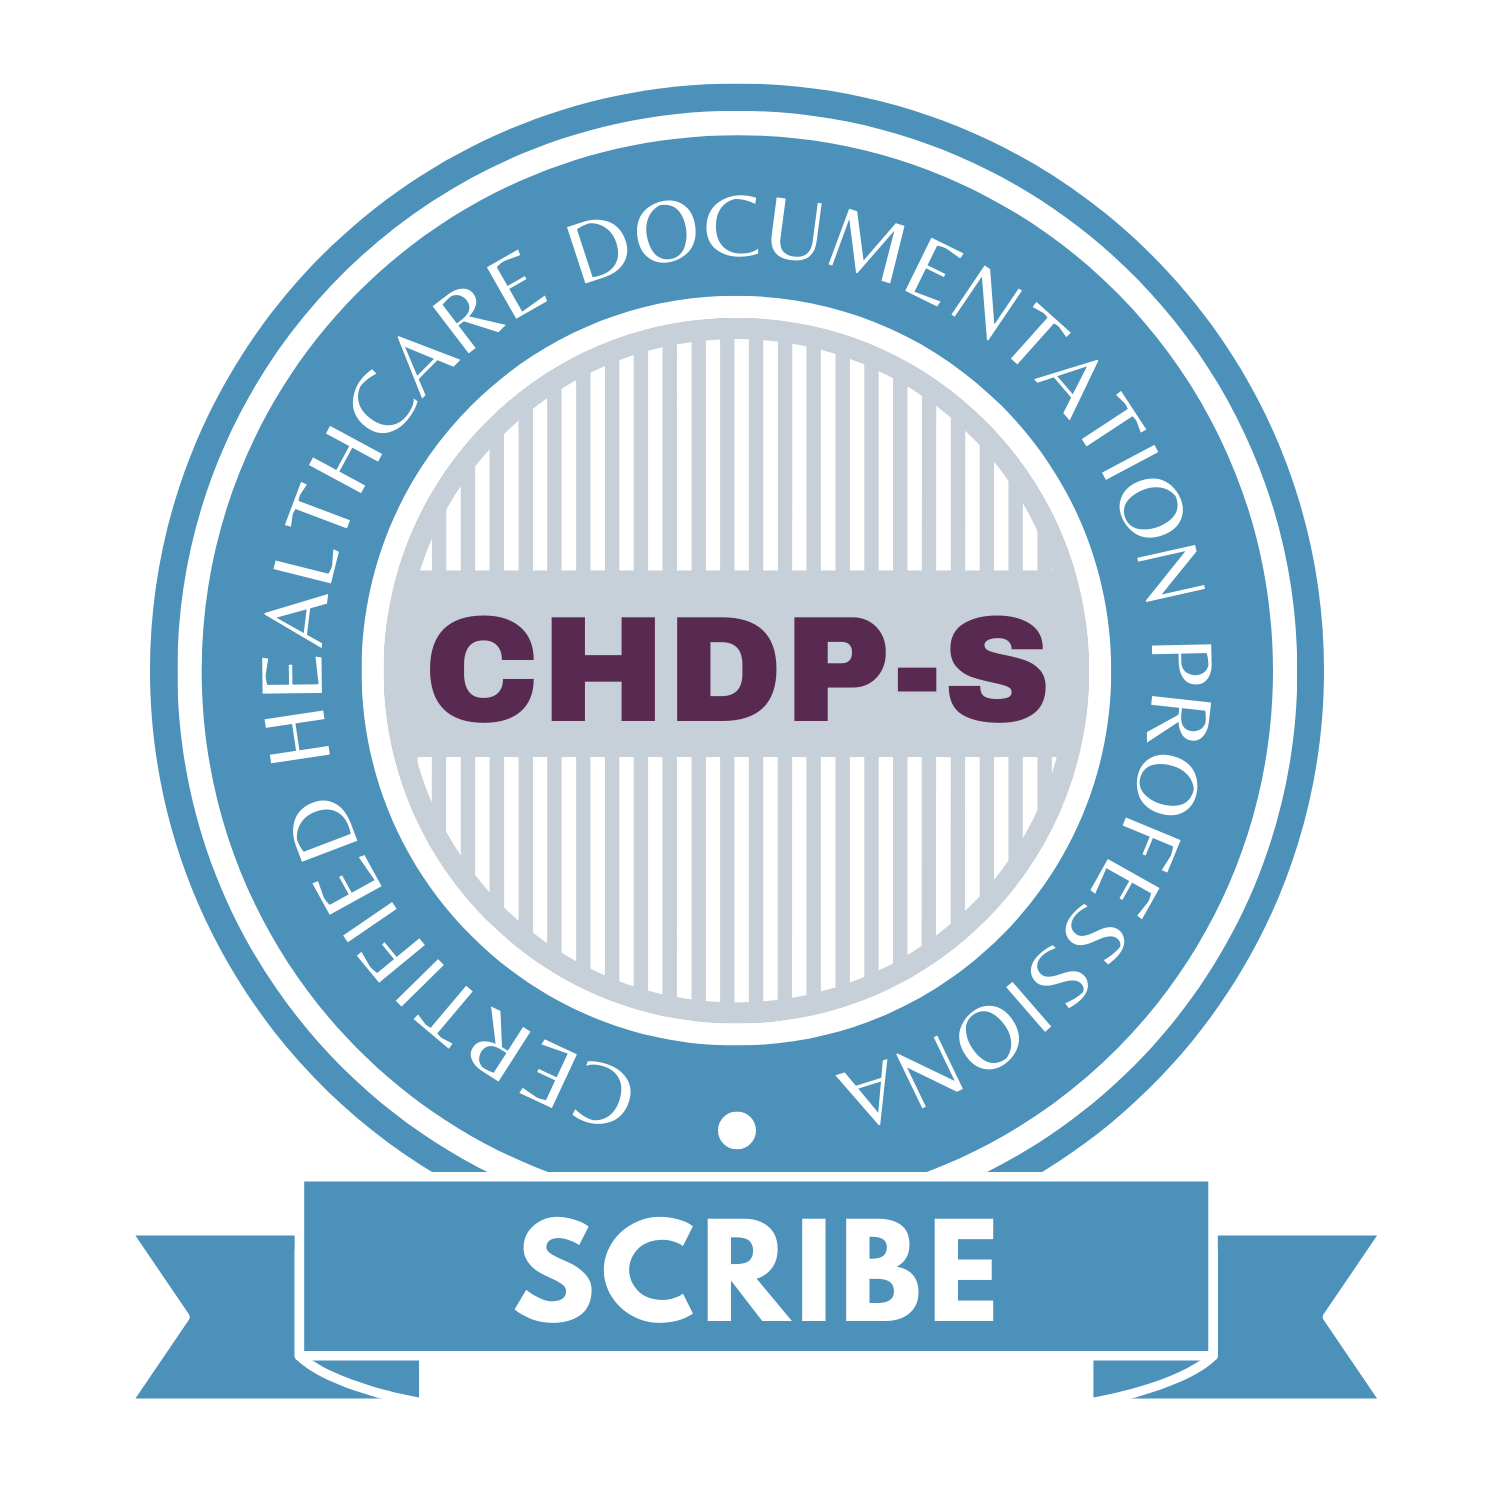 chdp-s logo